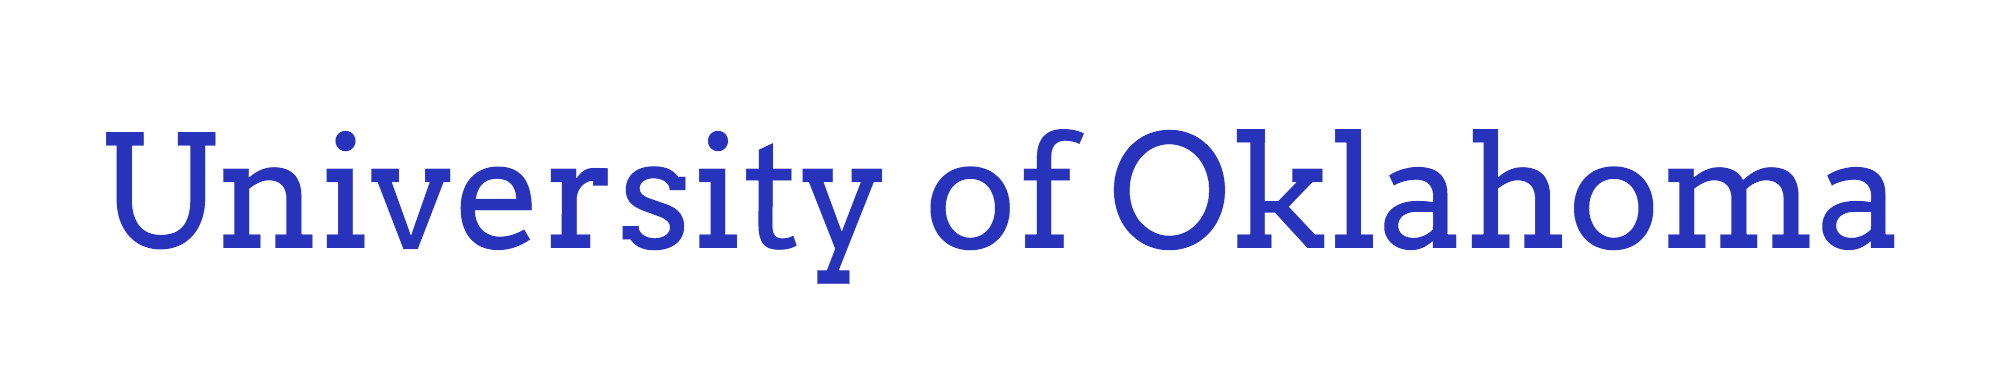 University of Oklahoma-logo.png